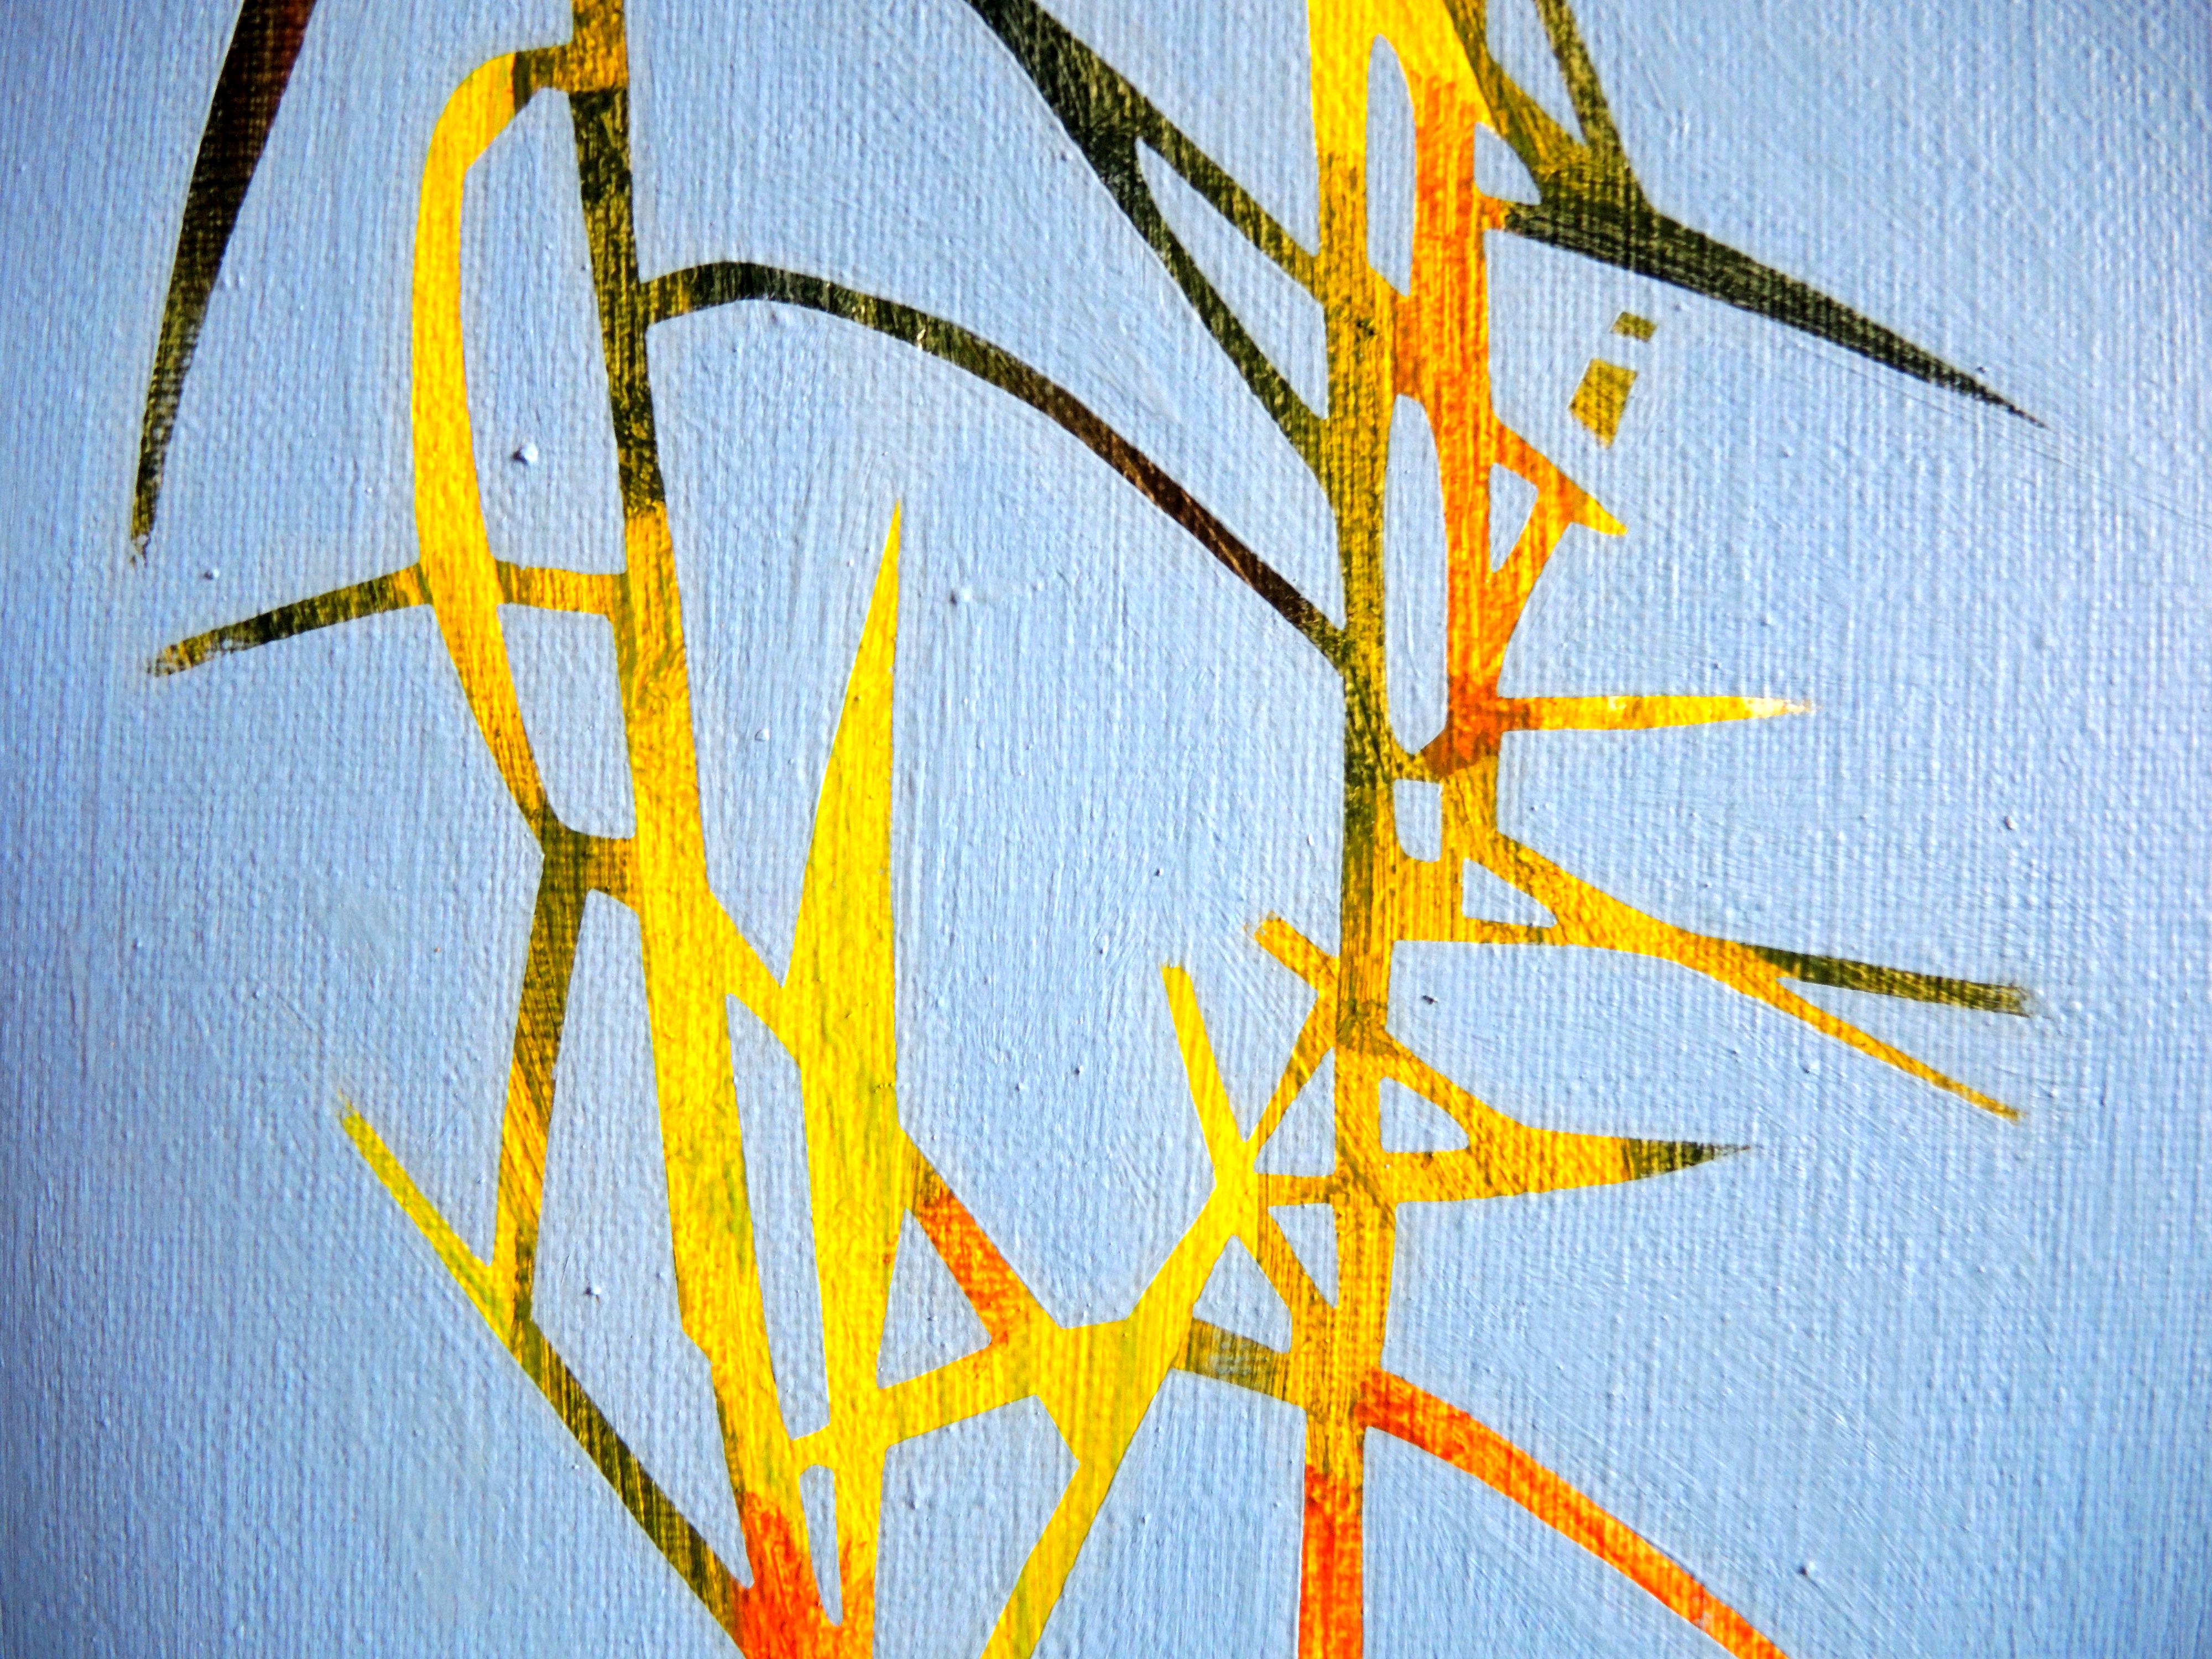 Reeds 28 September 13:42, Modern Landscape Oil Painting, Nature Lake, Minimalism 3